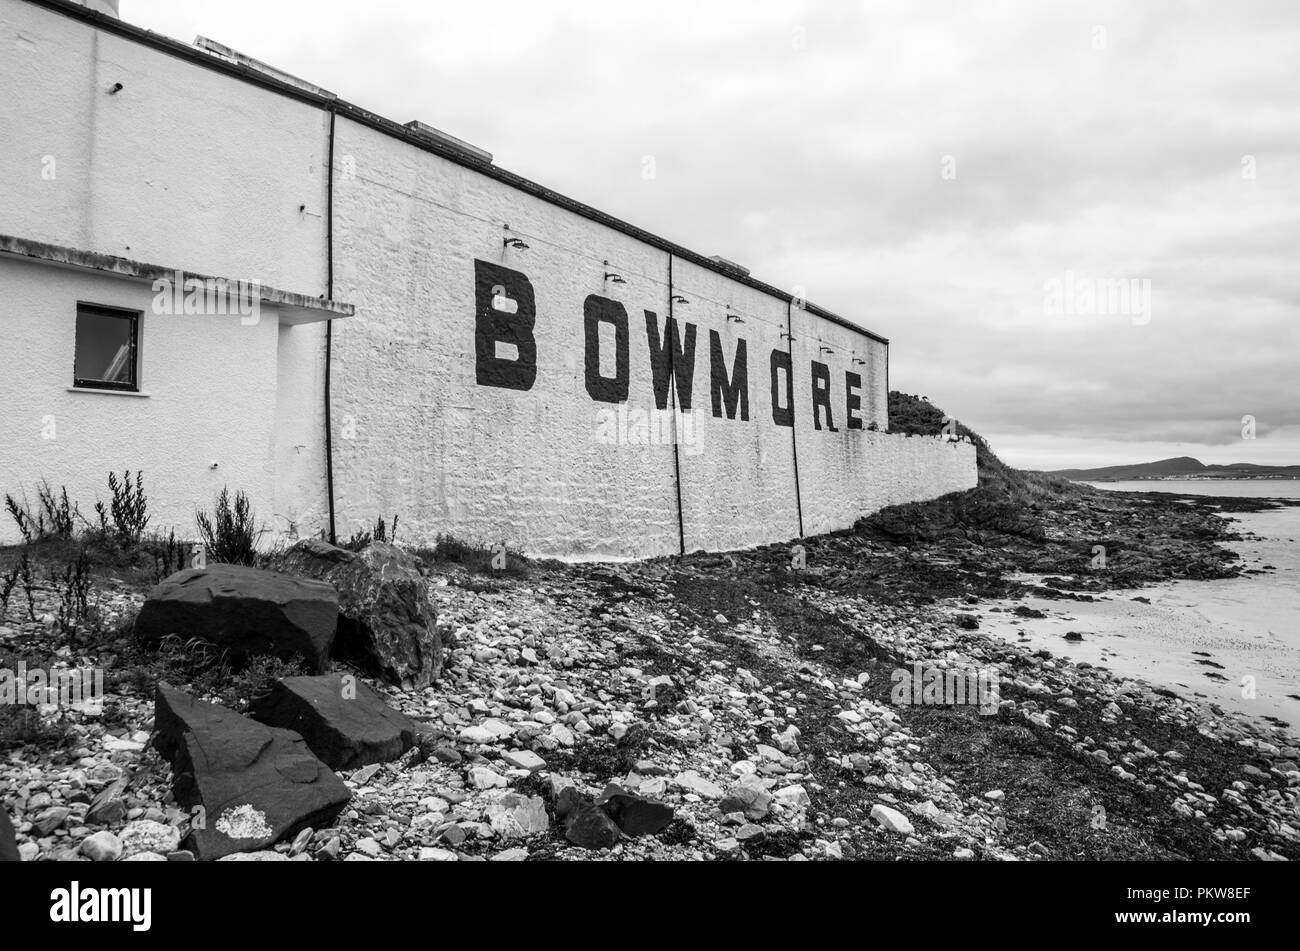 Bowmore Distillery, Islay, Scotland Stock Photo